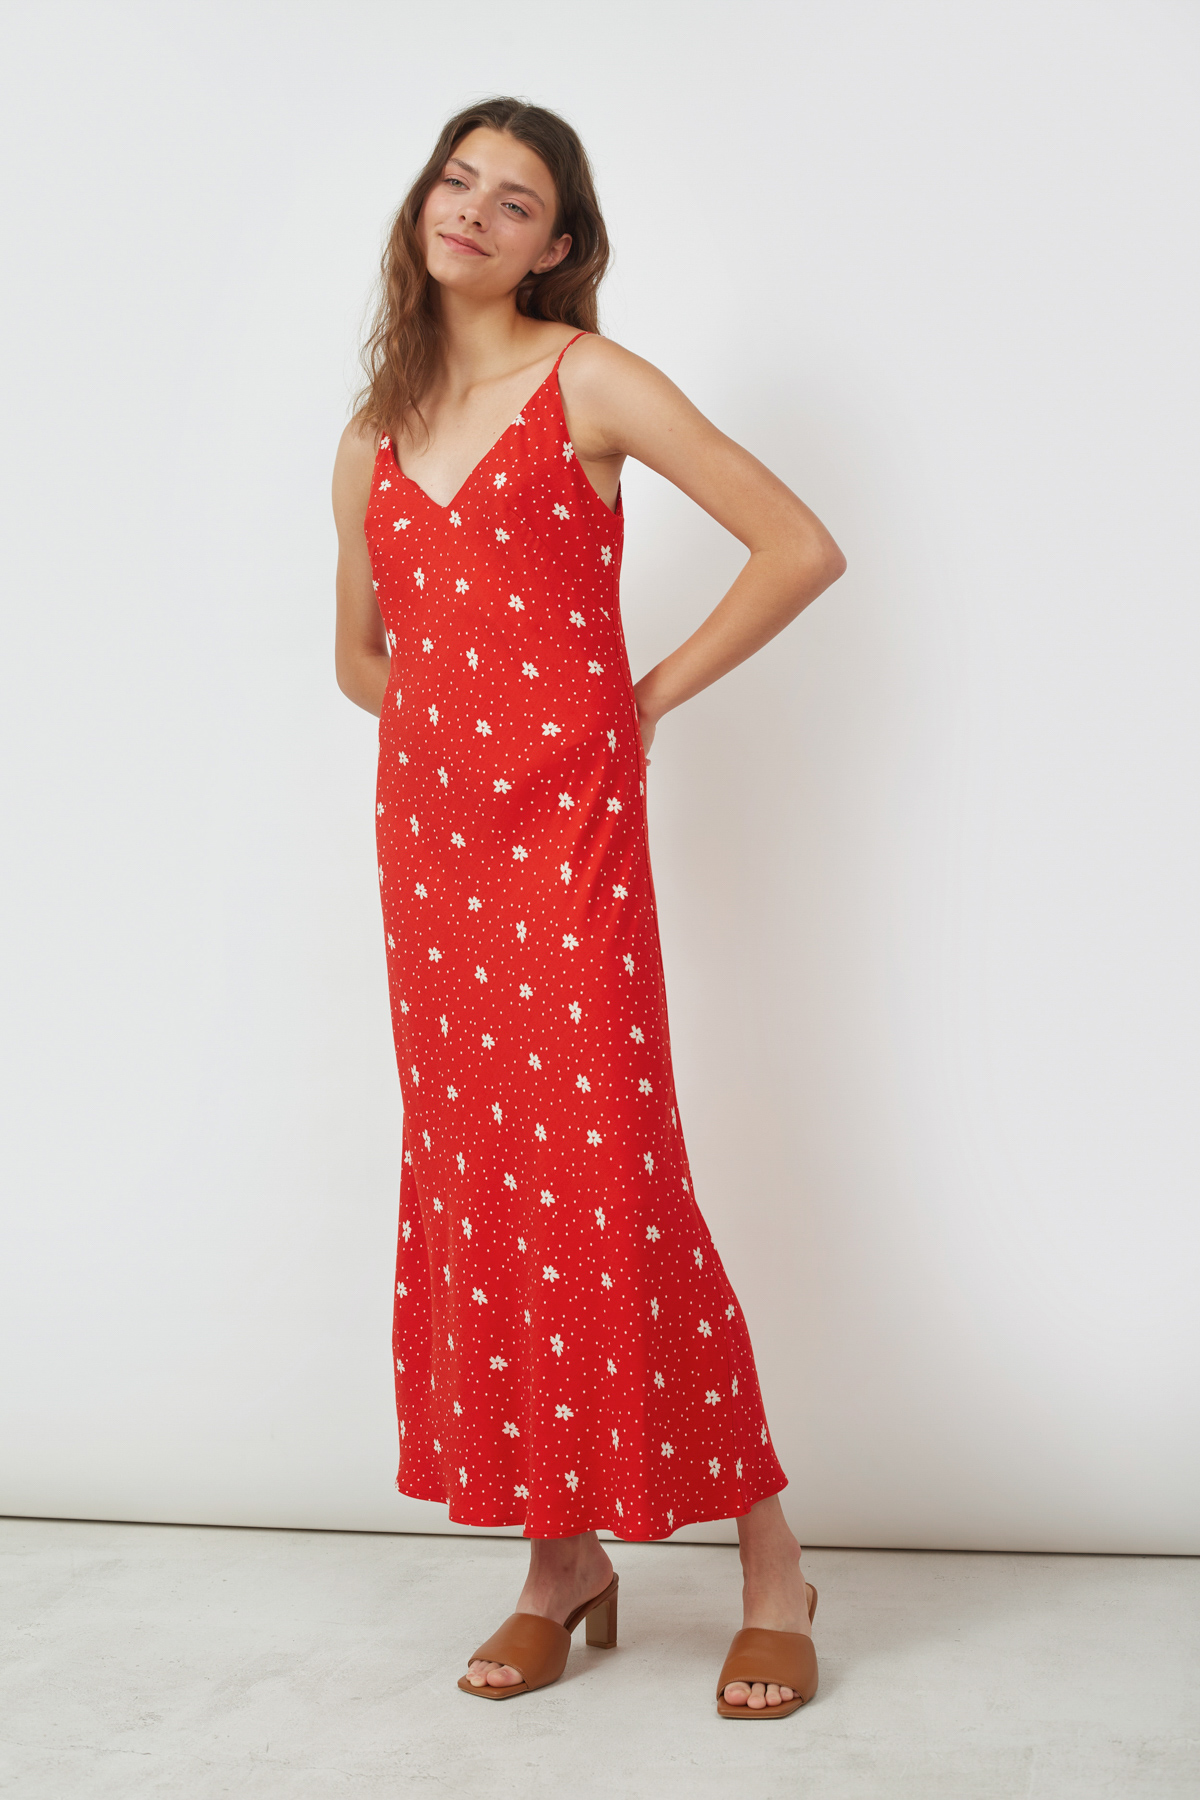 Viscose red slip dress in print flowers, photo 3